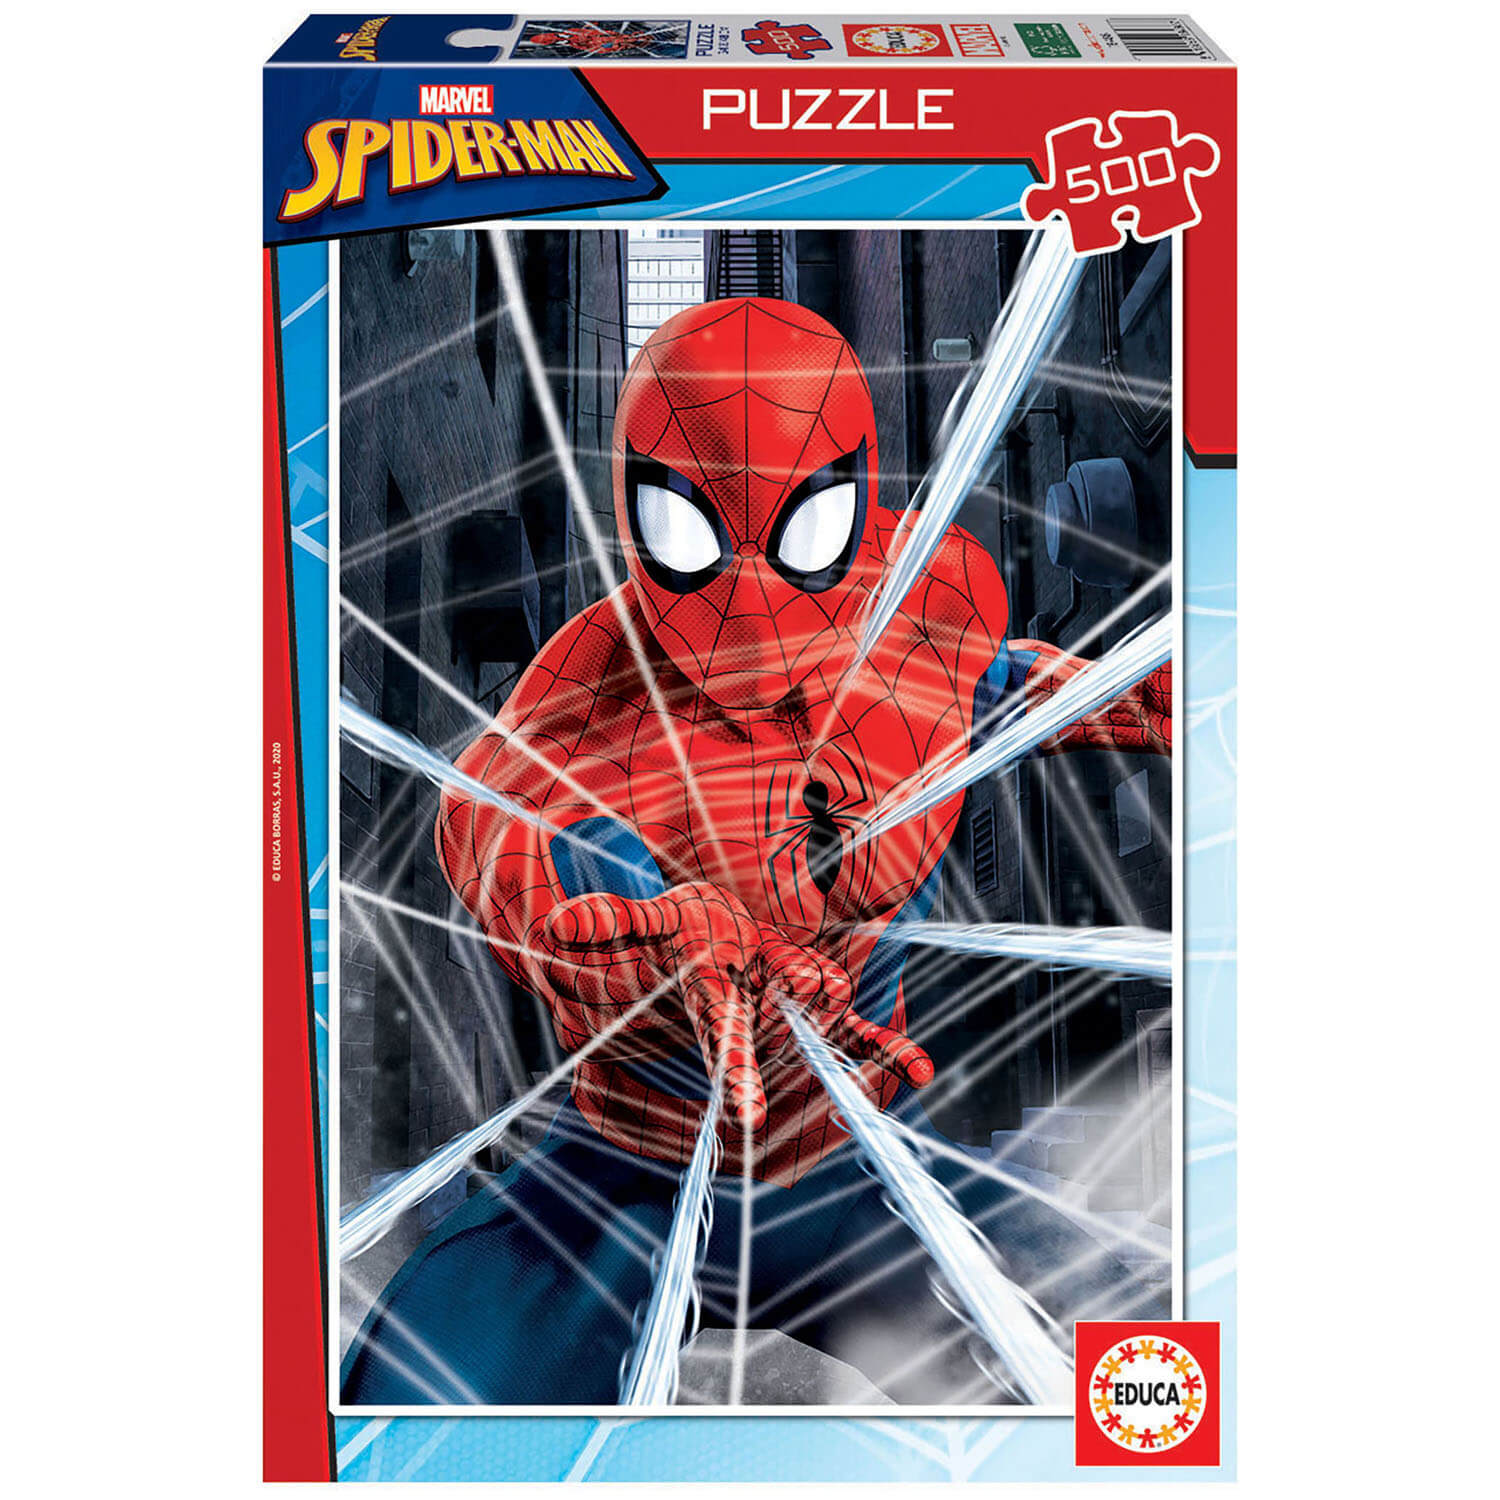 Puzzle 500 pièces : Spider-Man - Educa - Rue des Puzzles